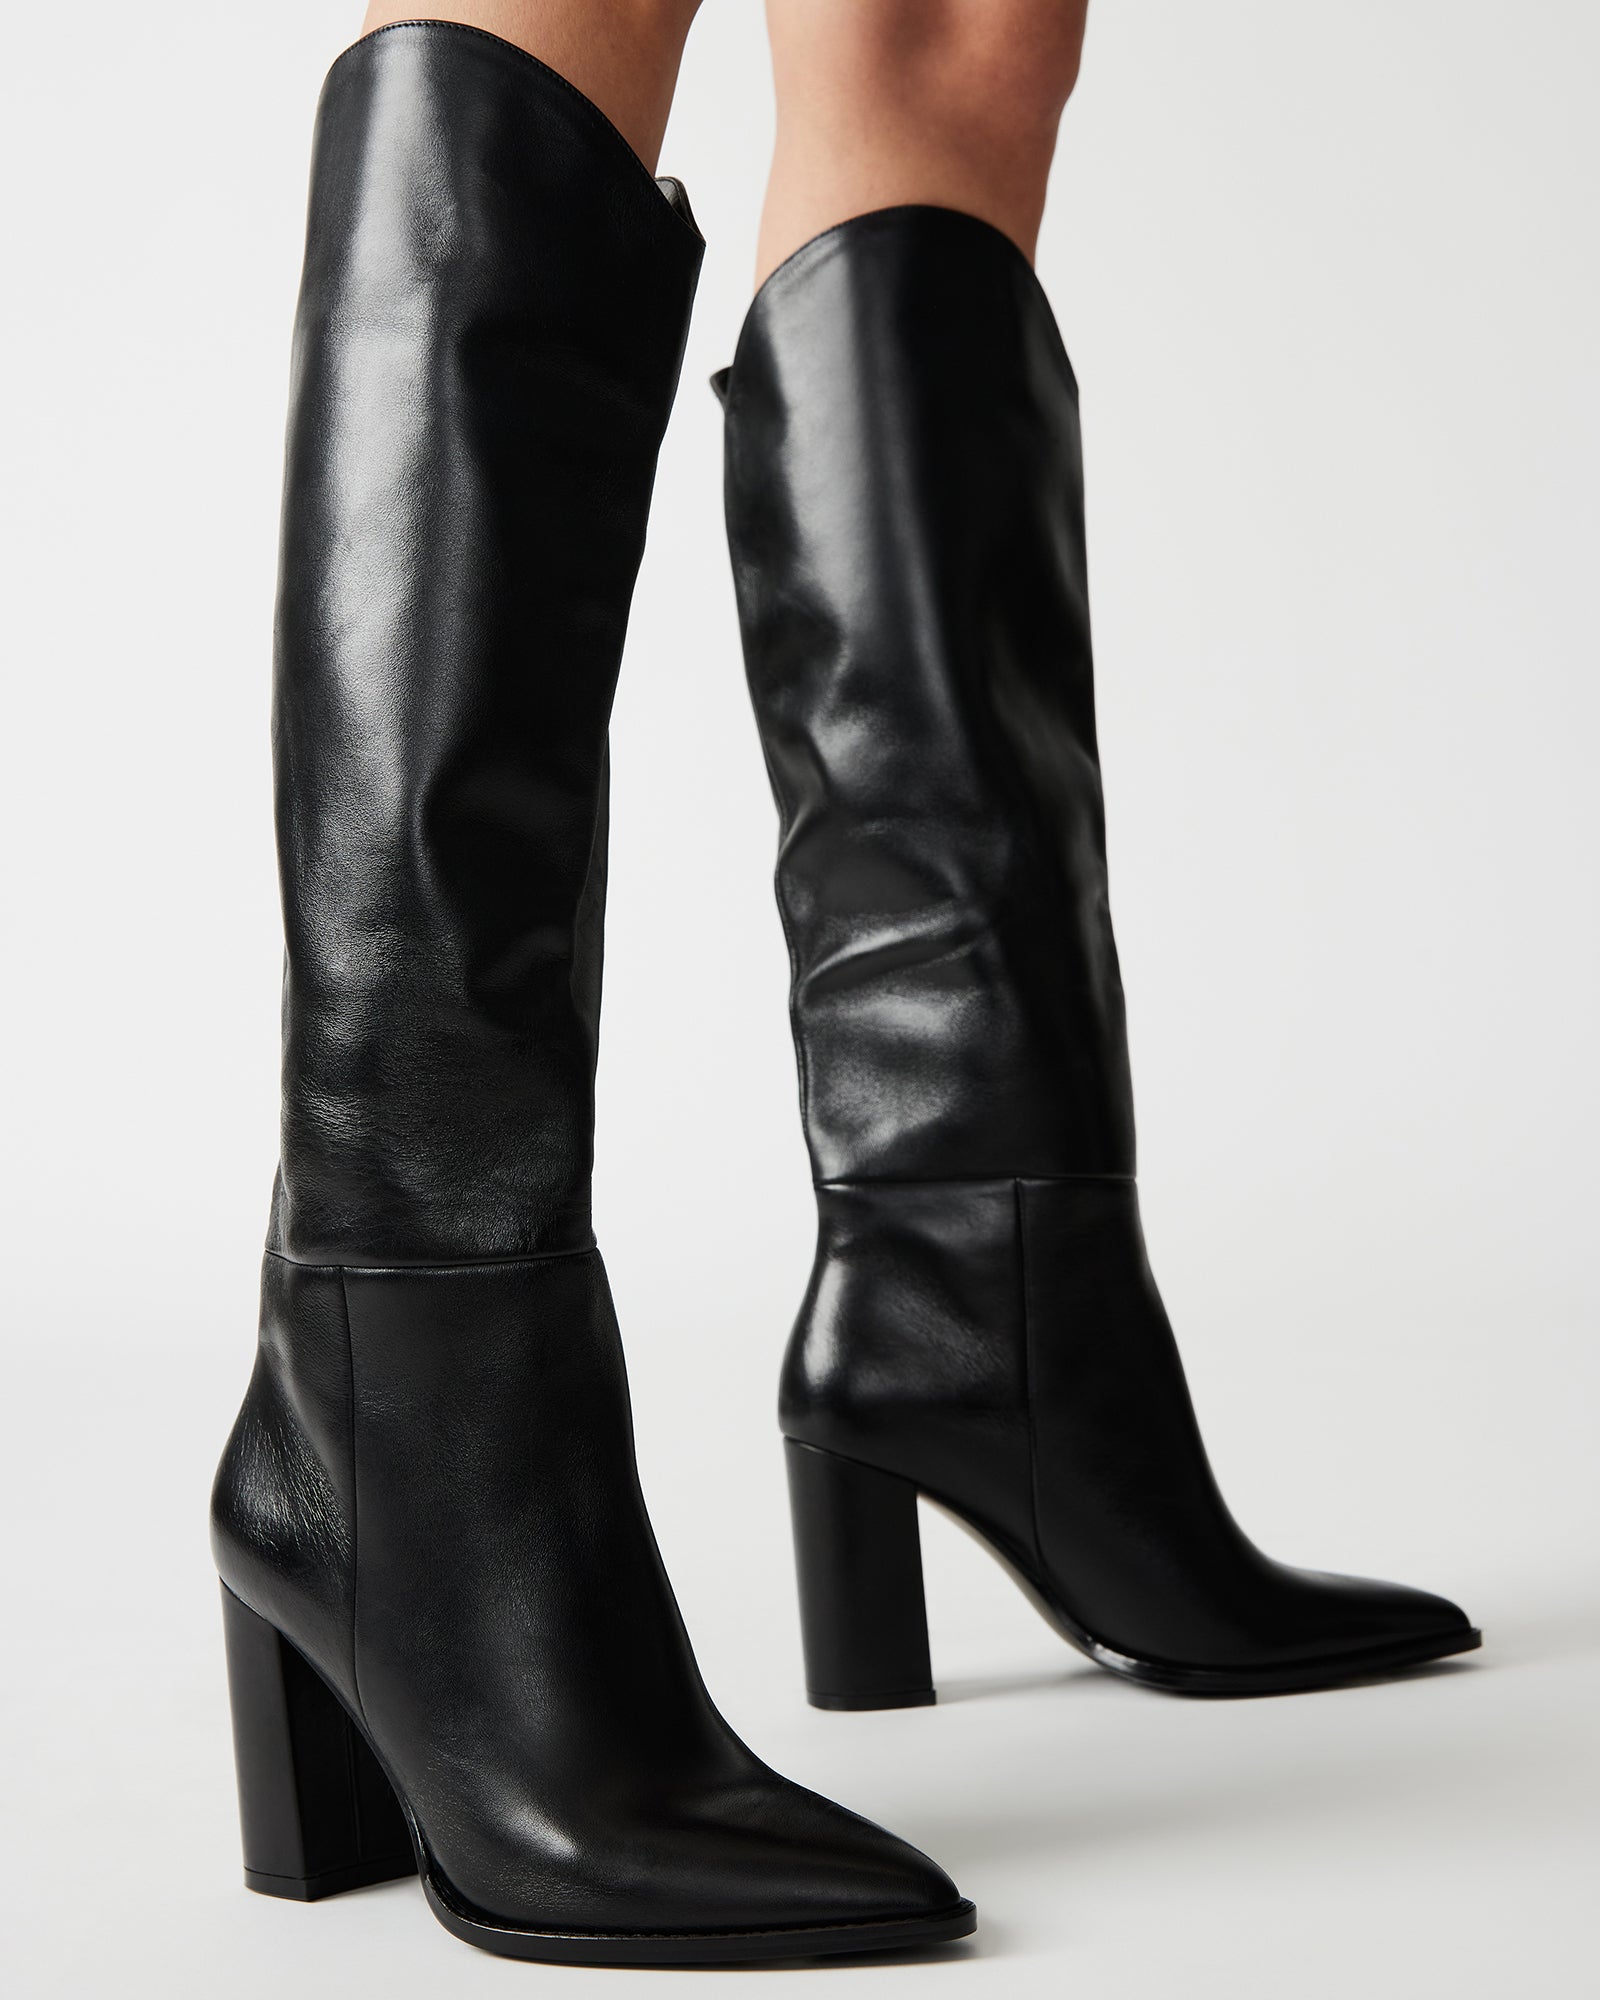 BIXBY Black Leather Knee High Boot | Women's Boots – Steve Madden